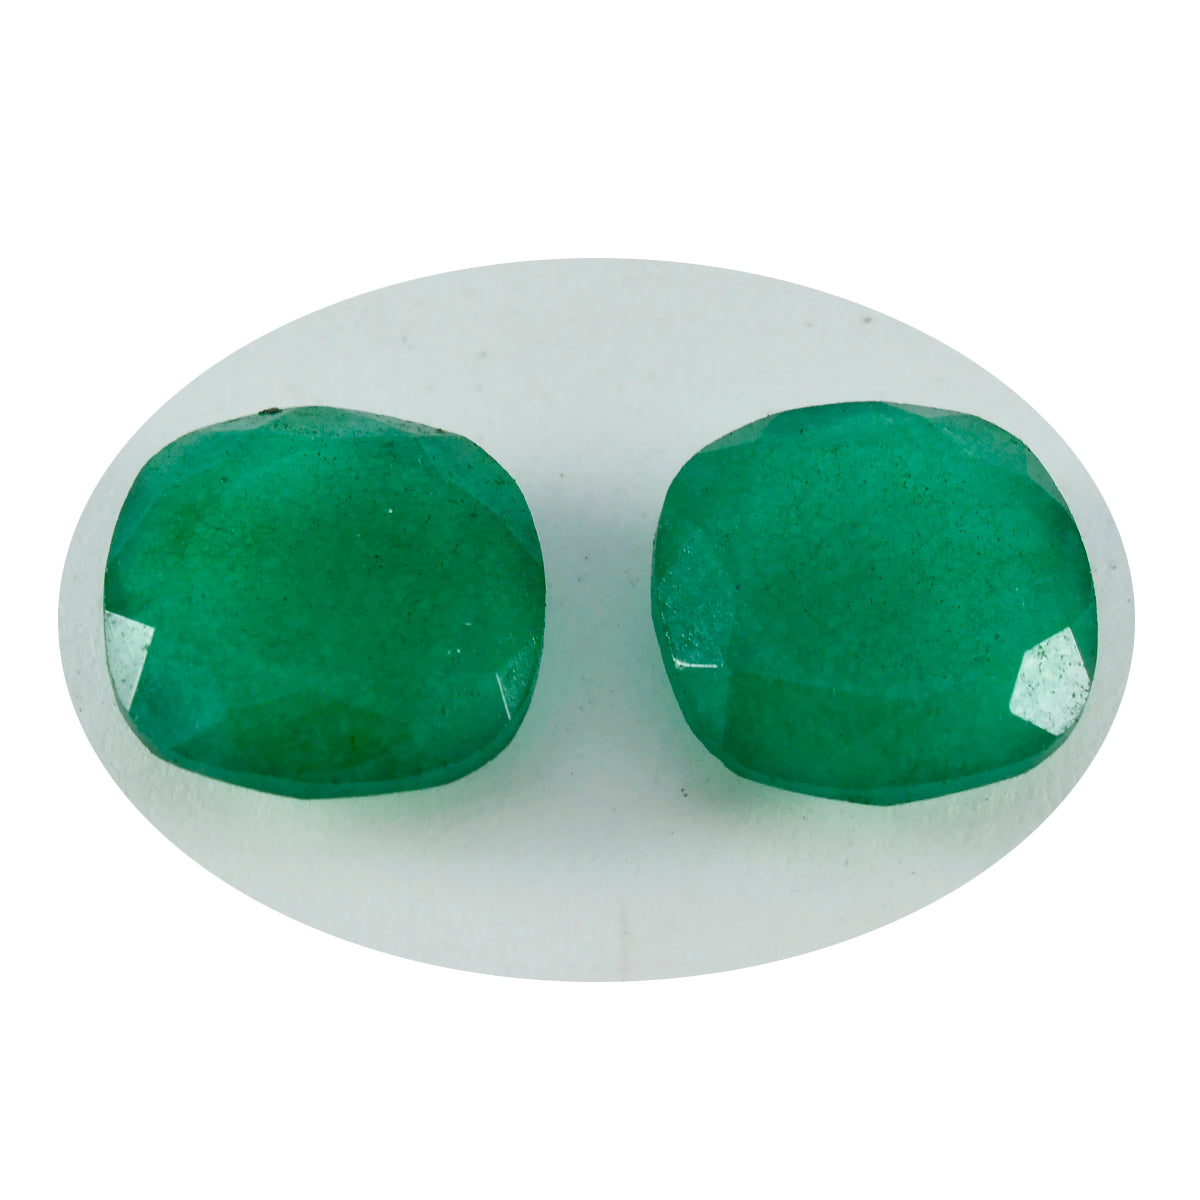 riyogems 1pc ナチュラル グリーン ジャスパー ファセット 11x11 mm クッション形状の見栄えの良い品質のルース宝石